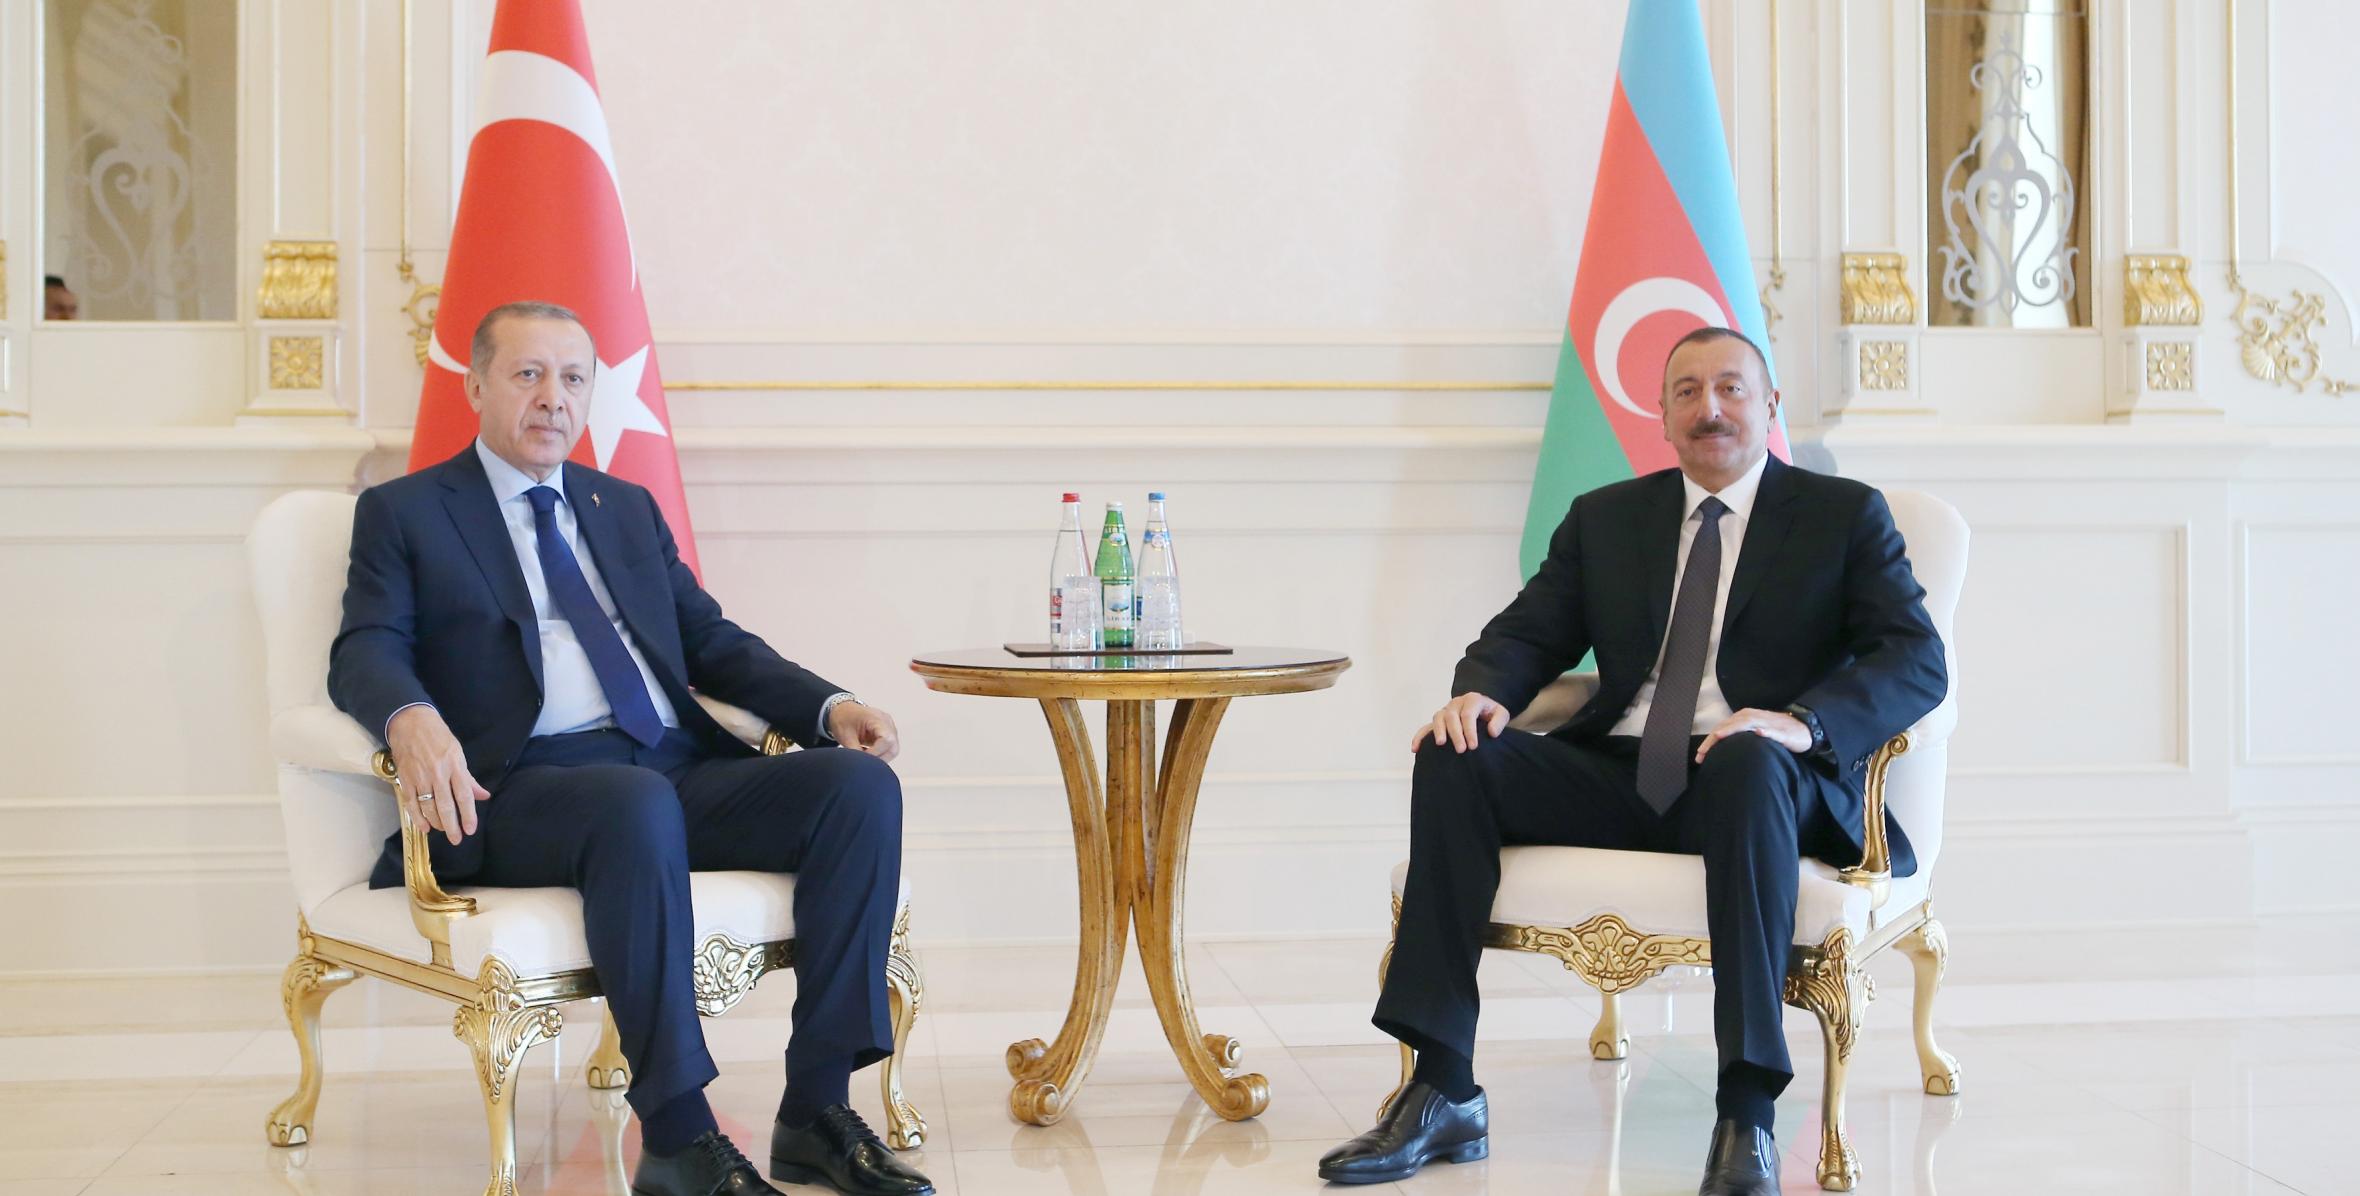 Ilham Aliyev, President Recep Tayyip Erdogan held one-on-one meeting